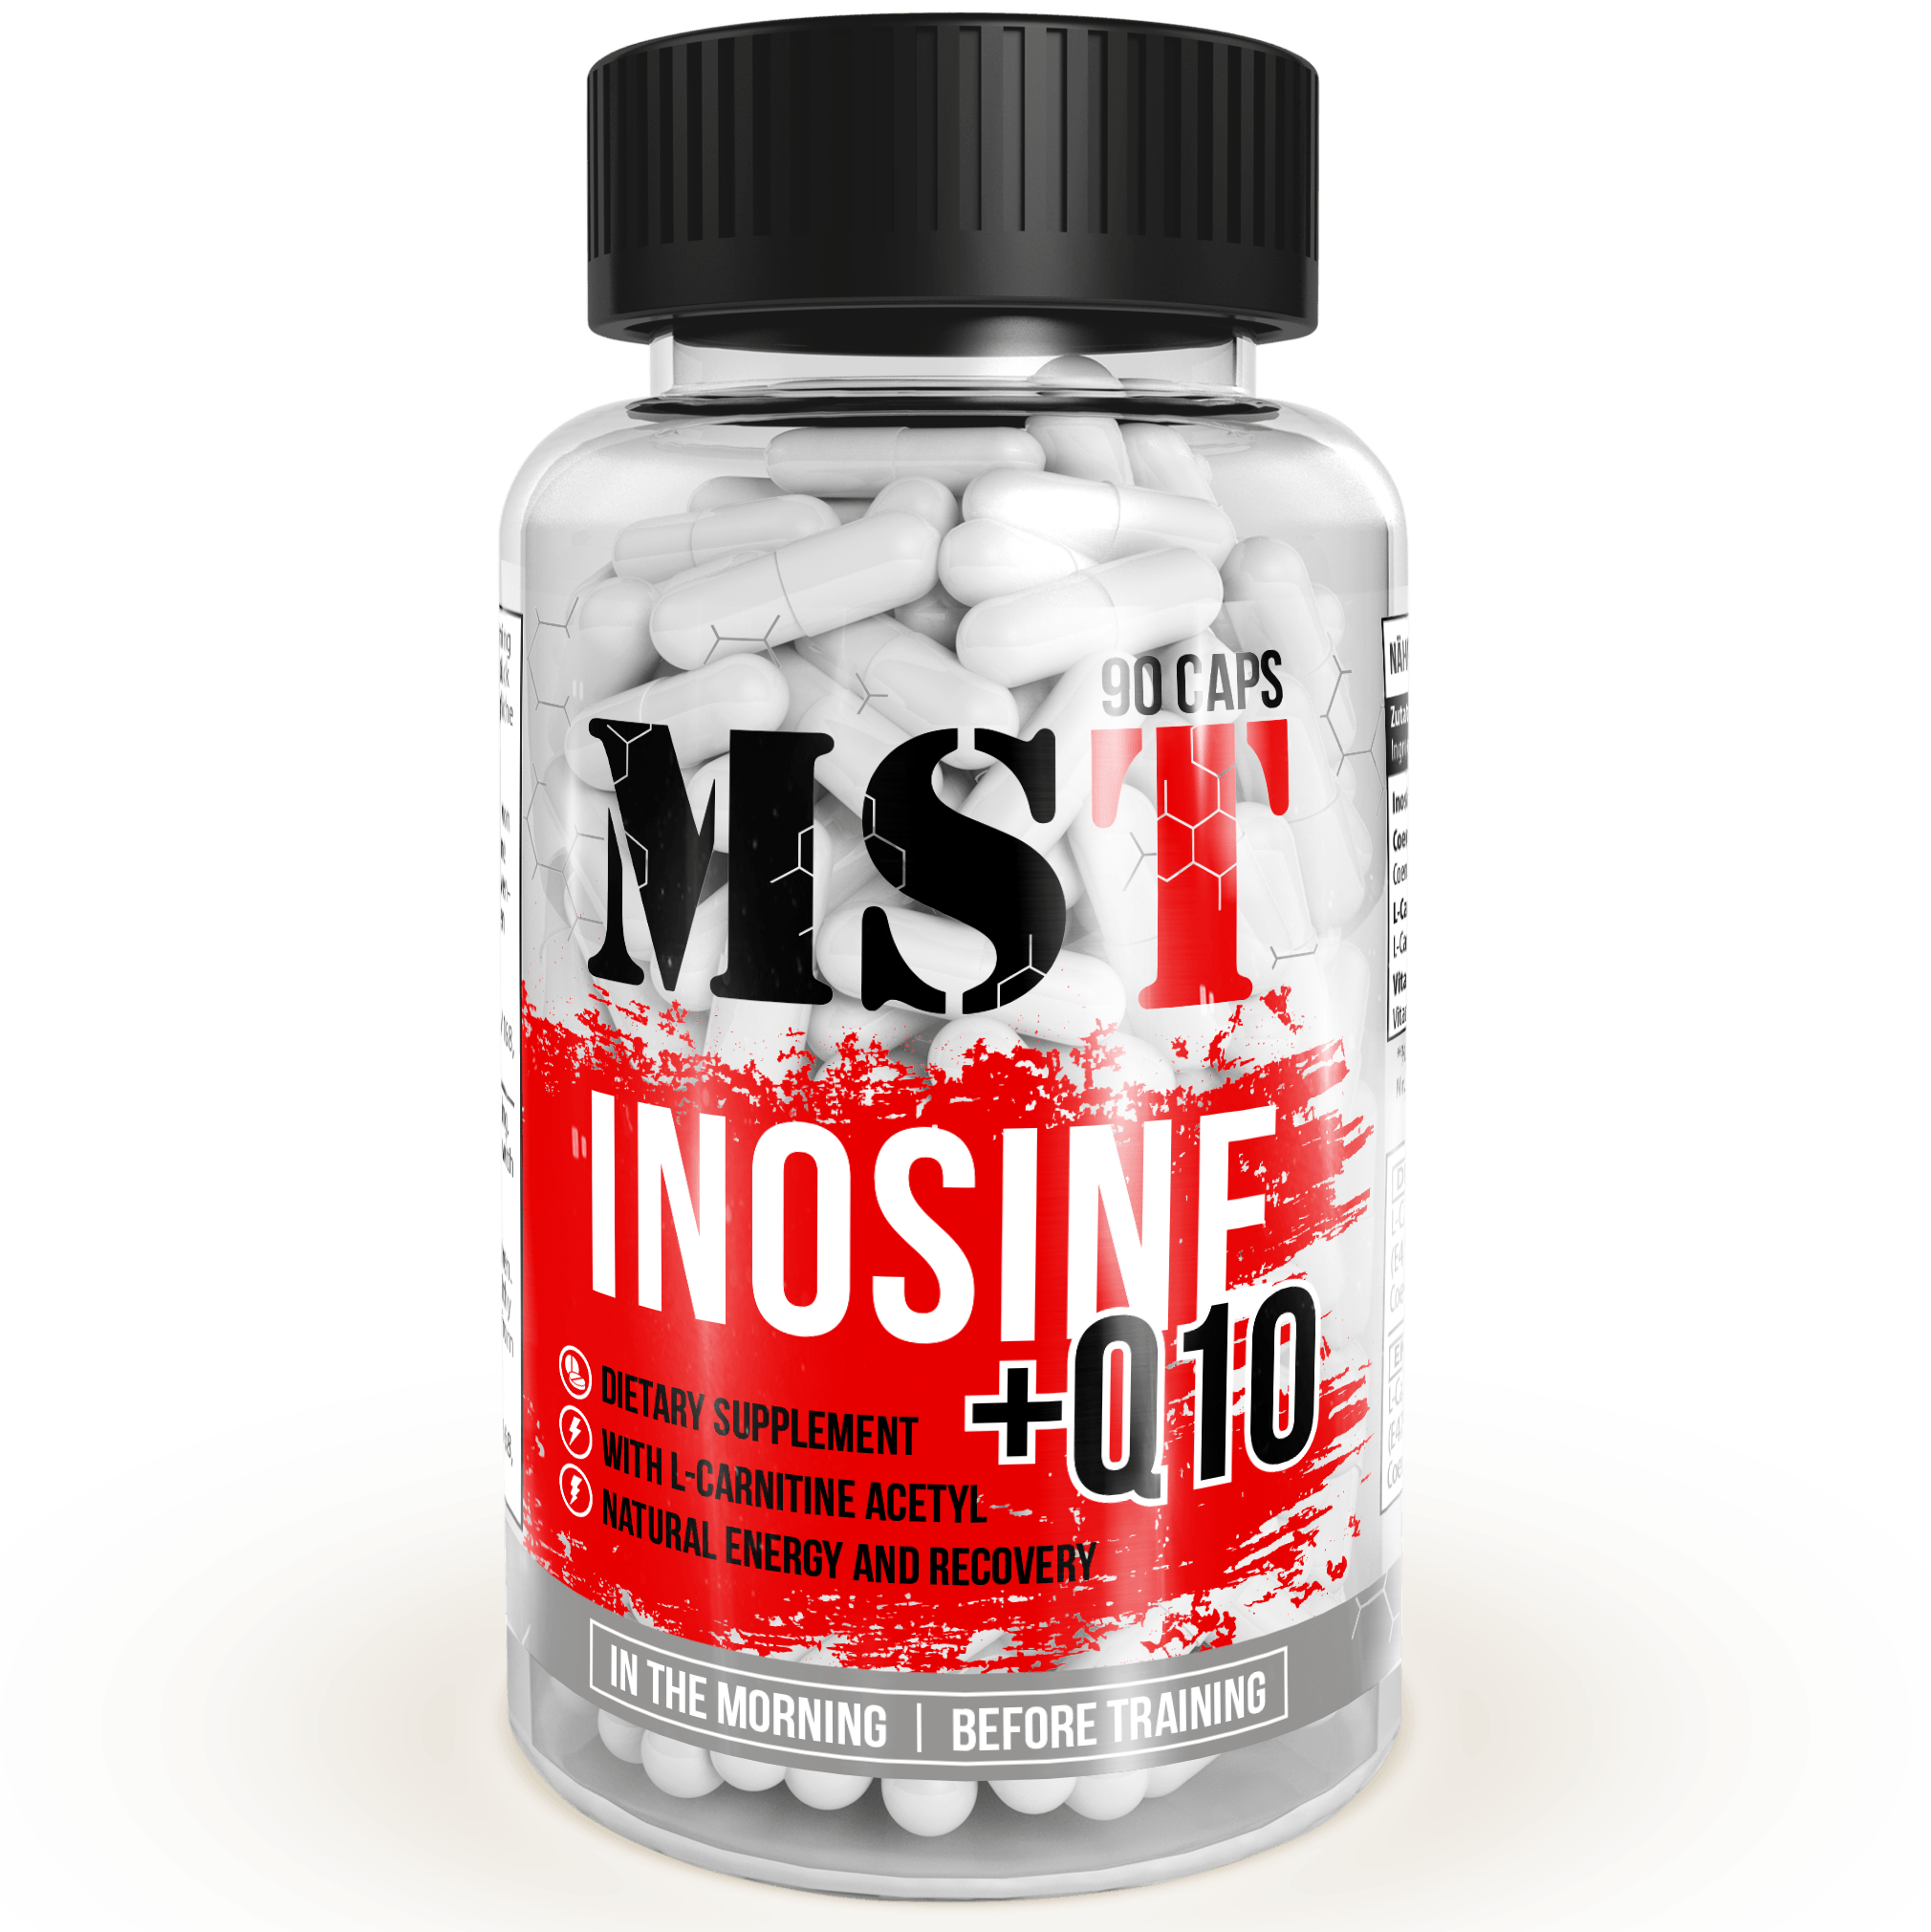 Inosine+Q10, 90 pcs, MST Nutrition. Special supplements. 